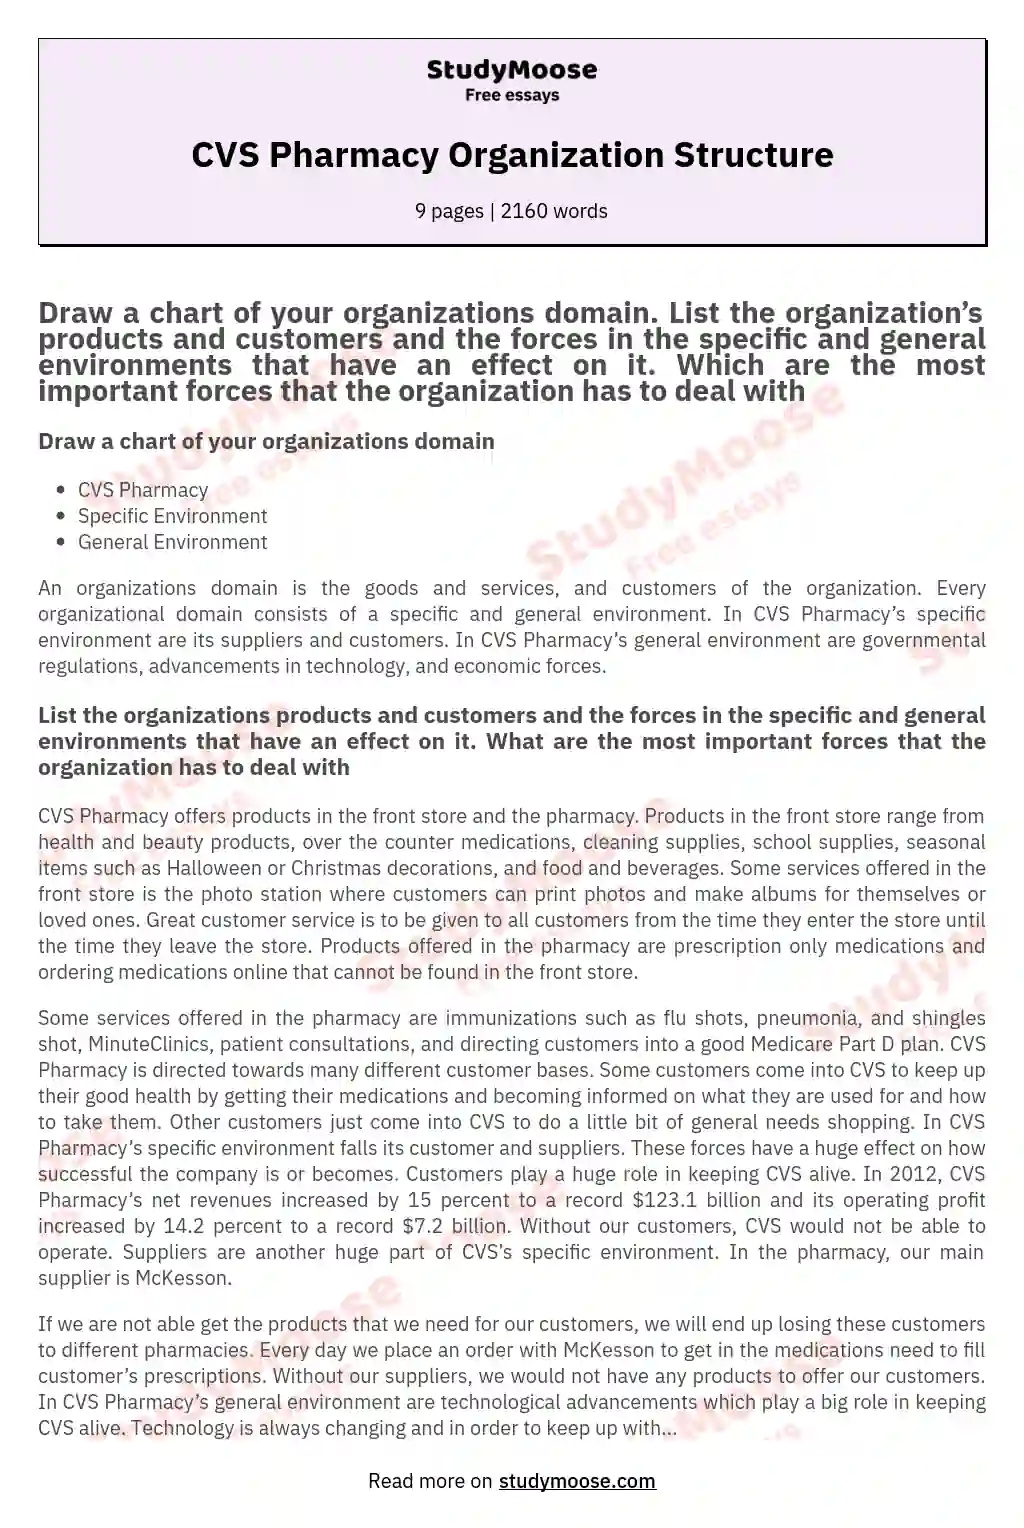 CVS Pharmacy Organization Structure essay